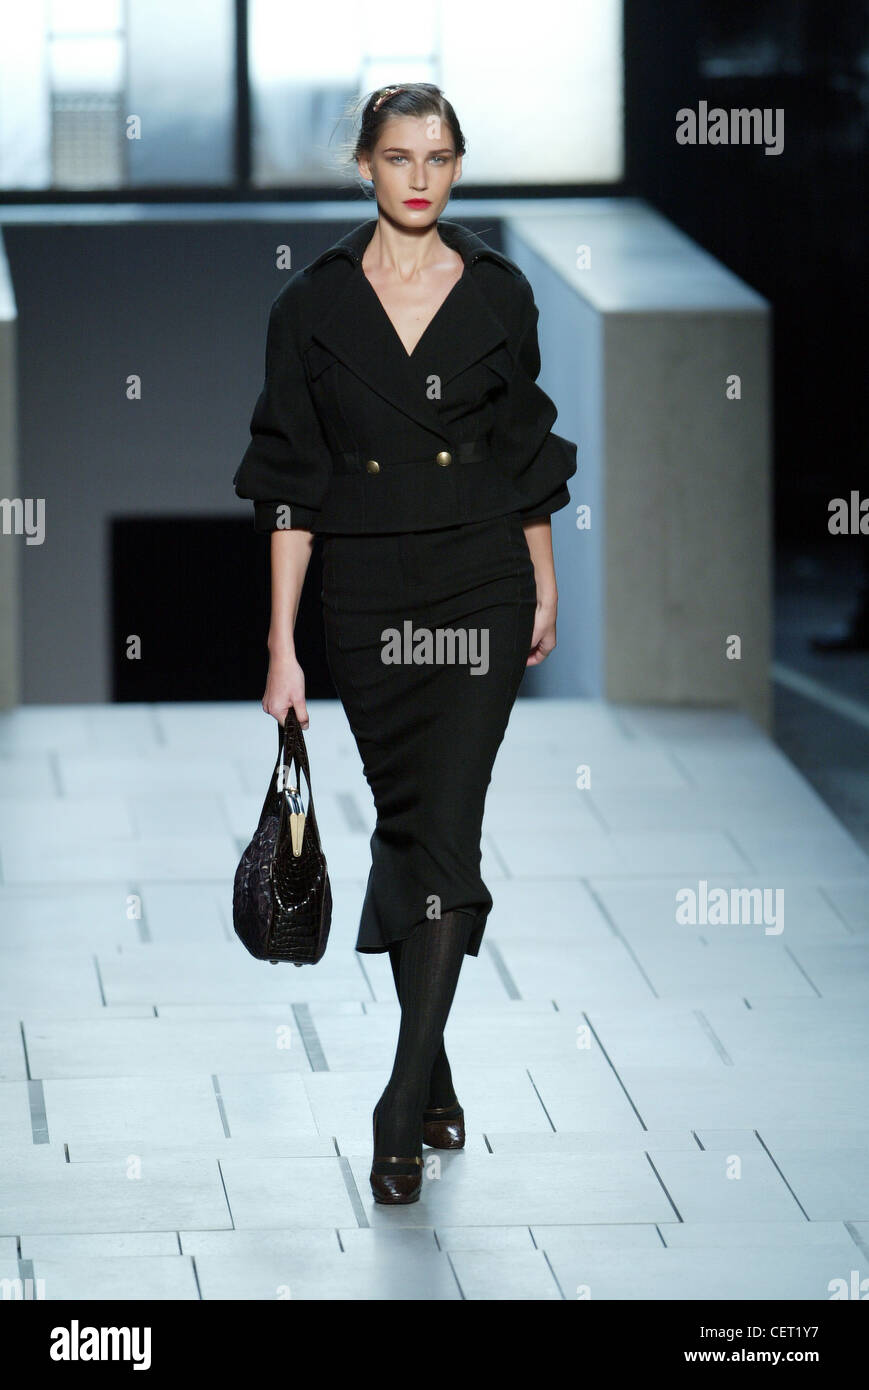 Spanish model Eugenia Silva in black skirt suit Stock Photo - Alamy